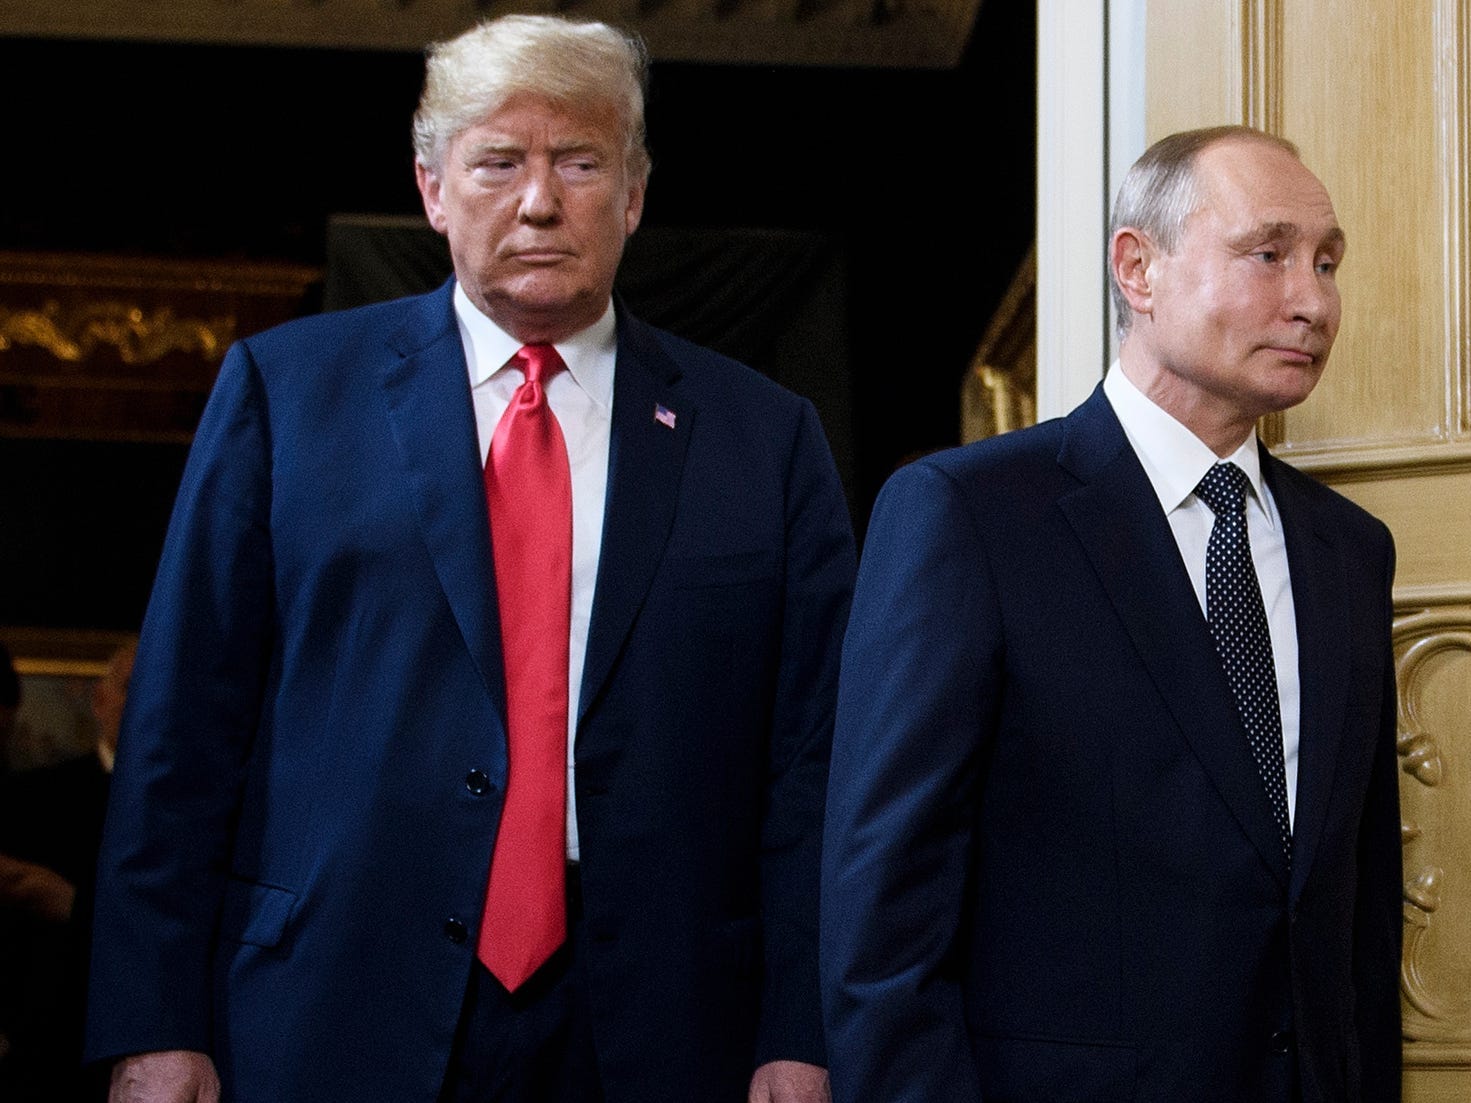 Former President Donald Trump and Russian President Vladimir Putin in Helsinki, Finland on July 16, 2018.